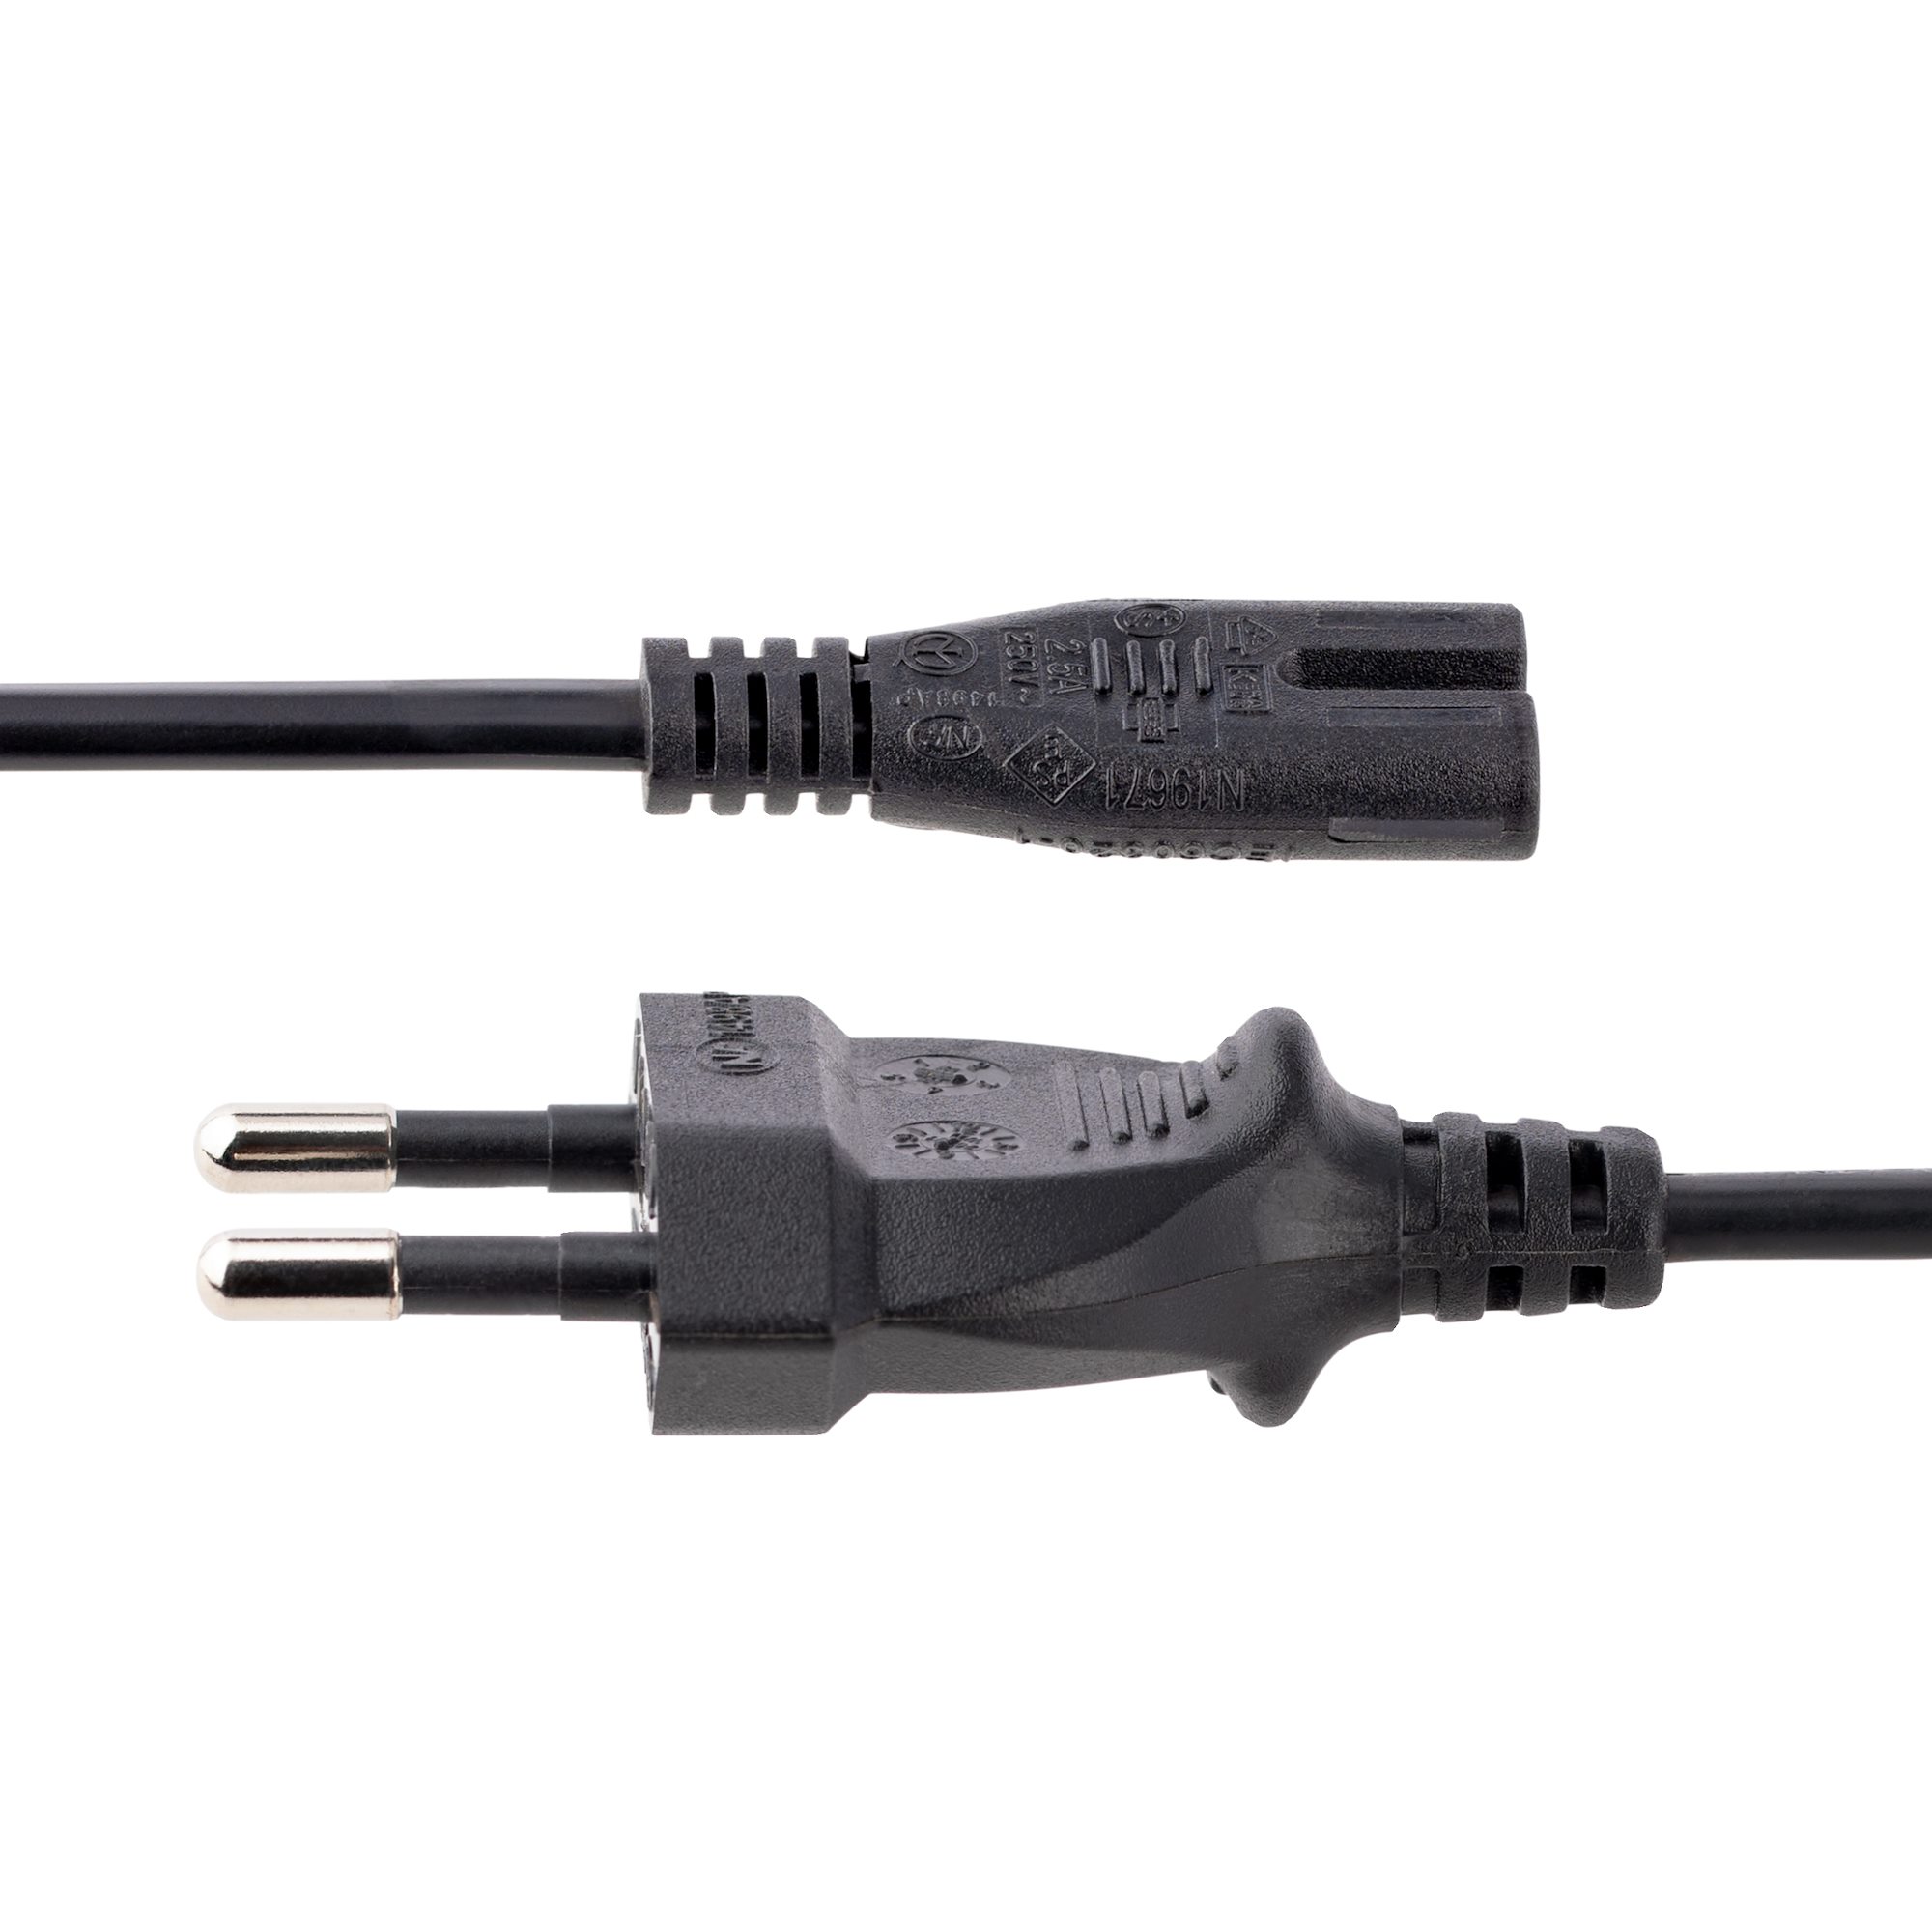 TNP 2 Prong Power Cord NEMA 1-15P to IEC320 C7 Power Cable